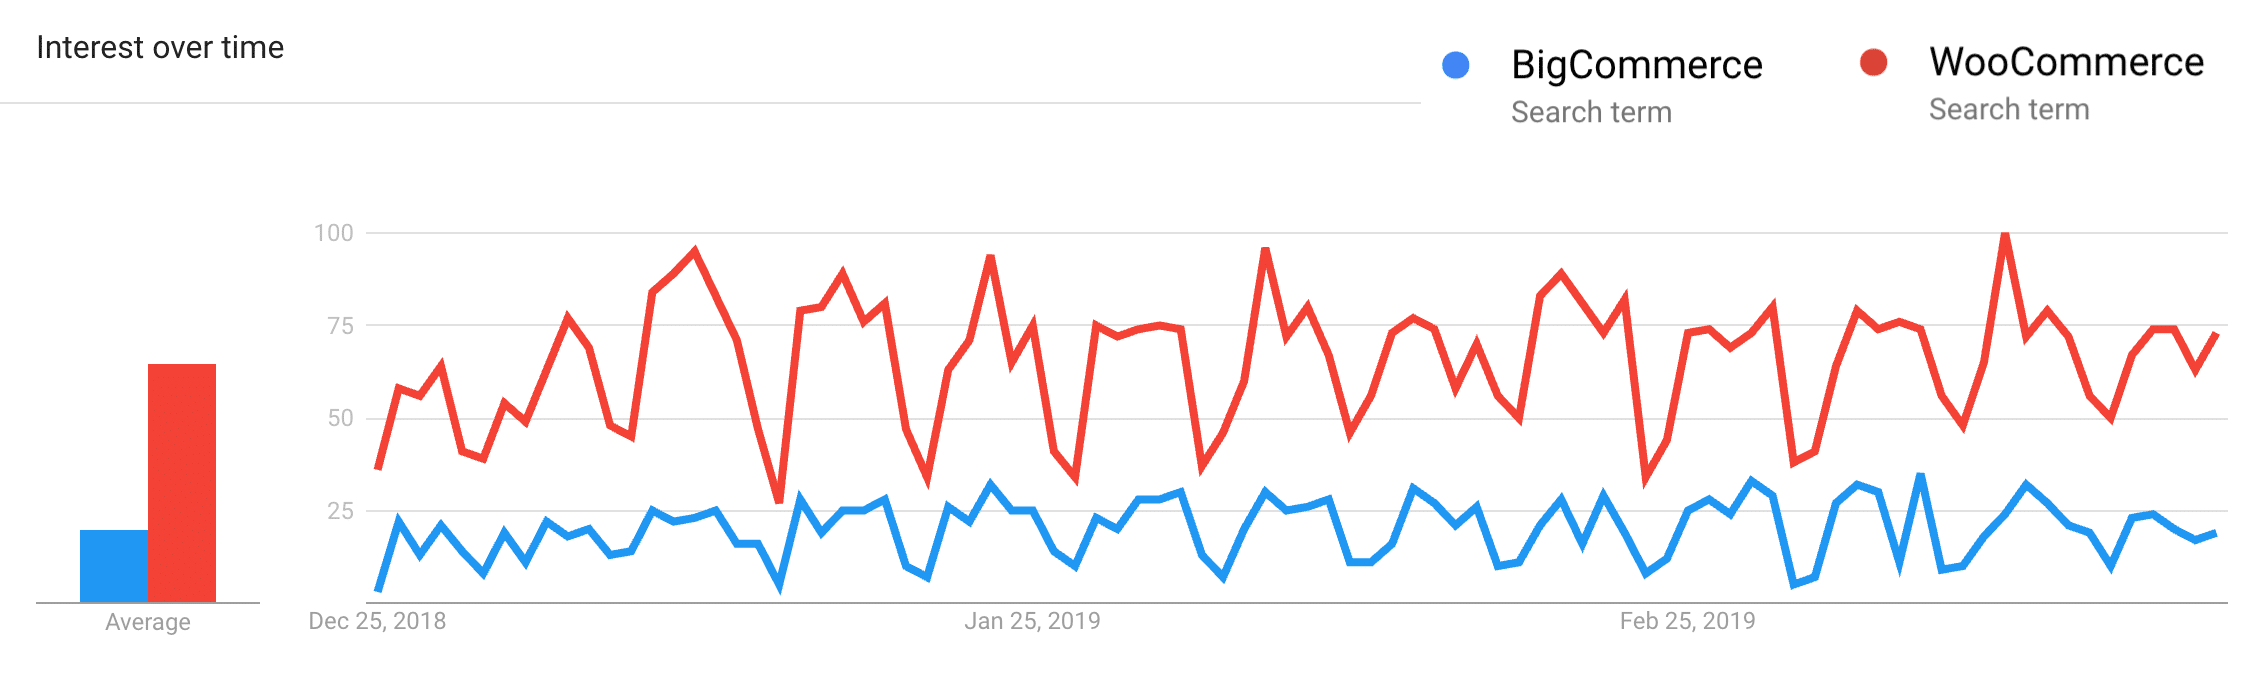 Google trends - BigCommerce vs WooCommerce